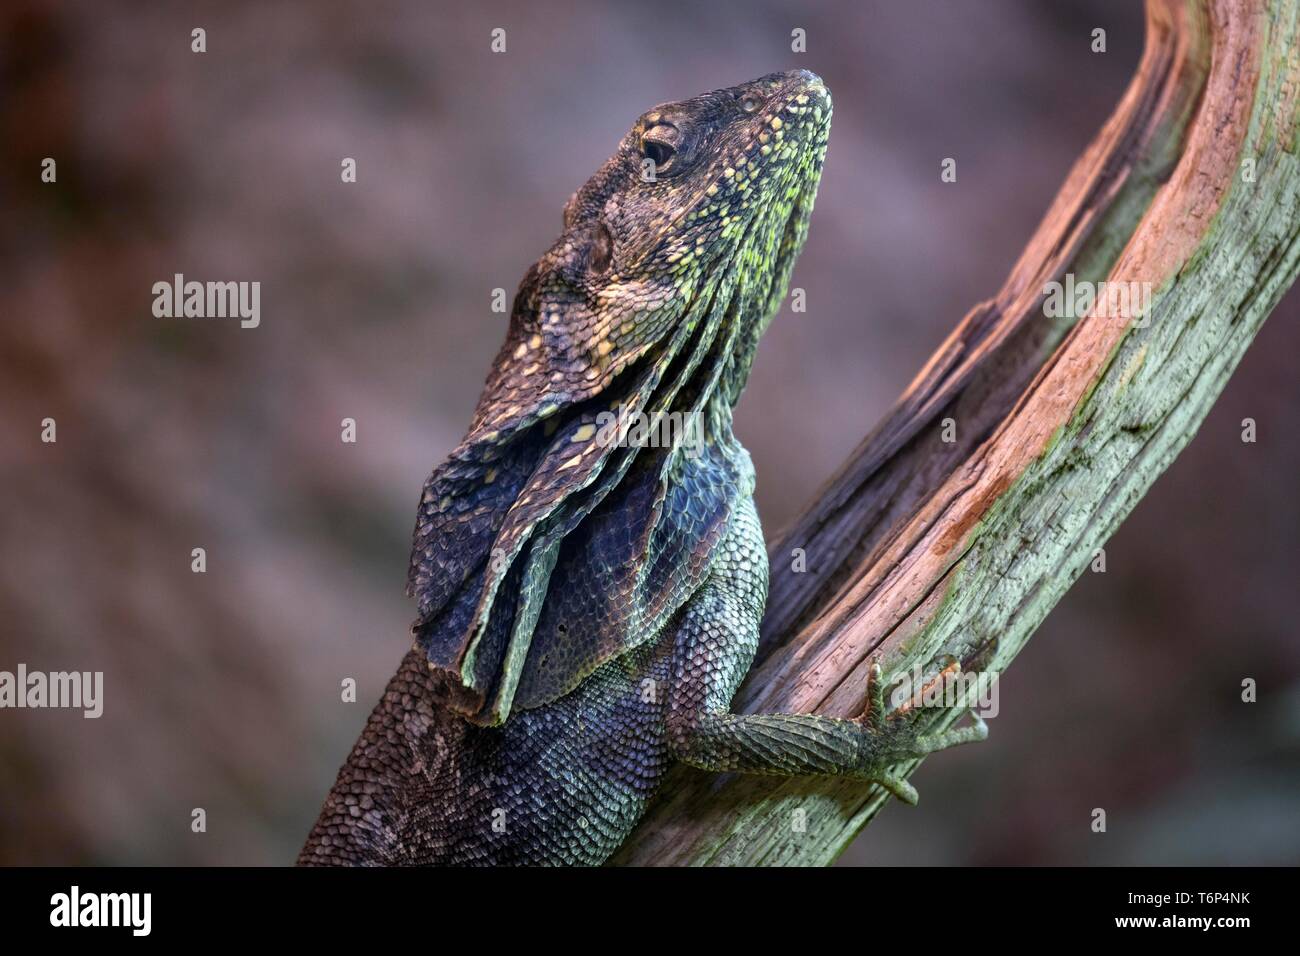 Frill-necked lizard (Chlamydosaurus kingii) on branch, animal portrait, captive, Germany Stock Photo